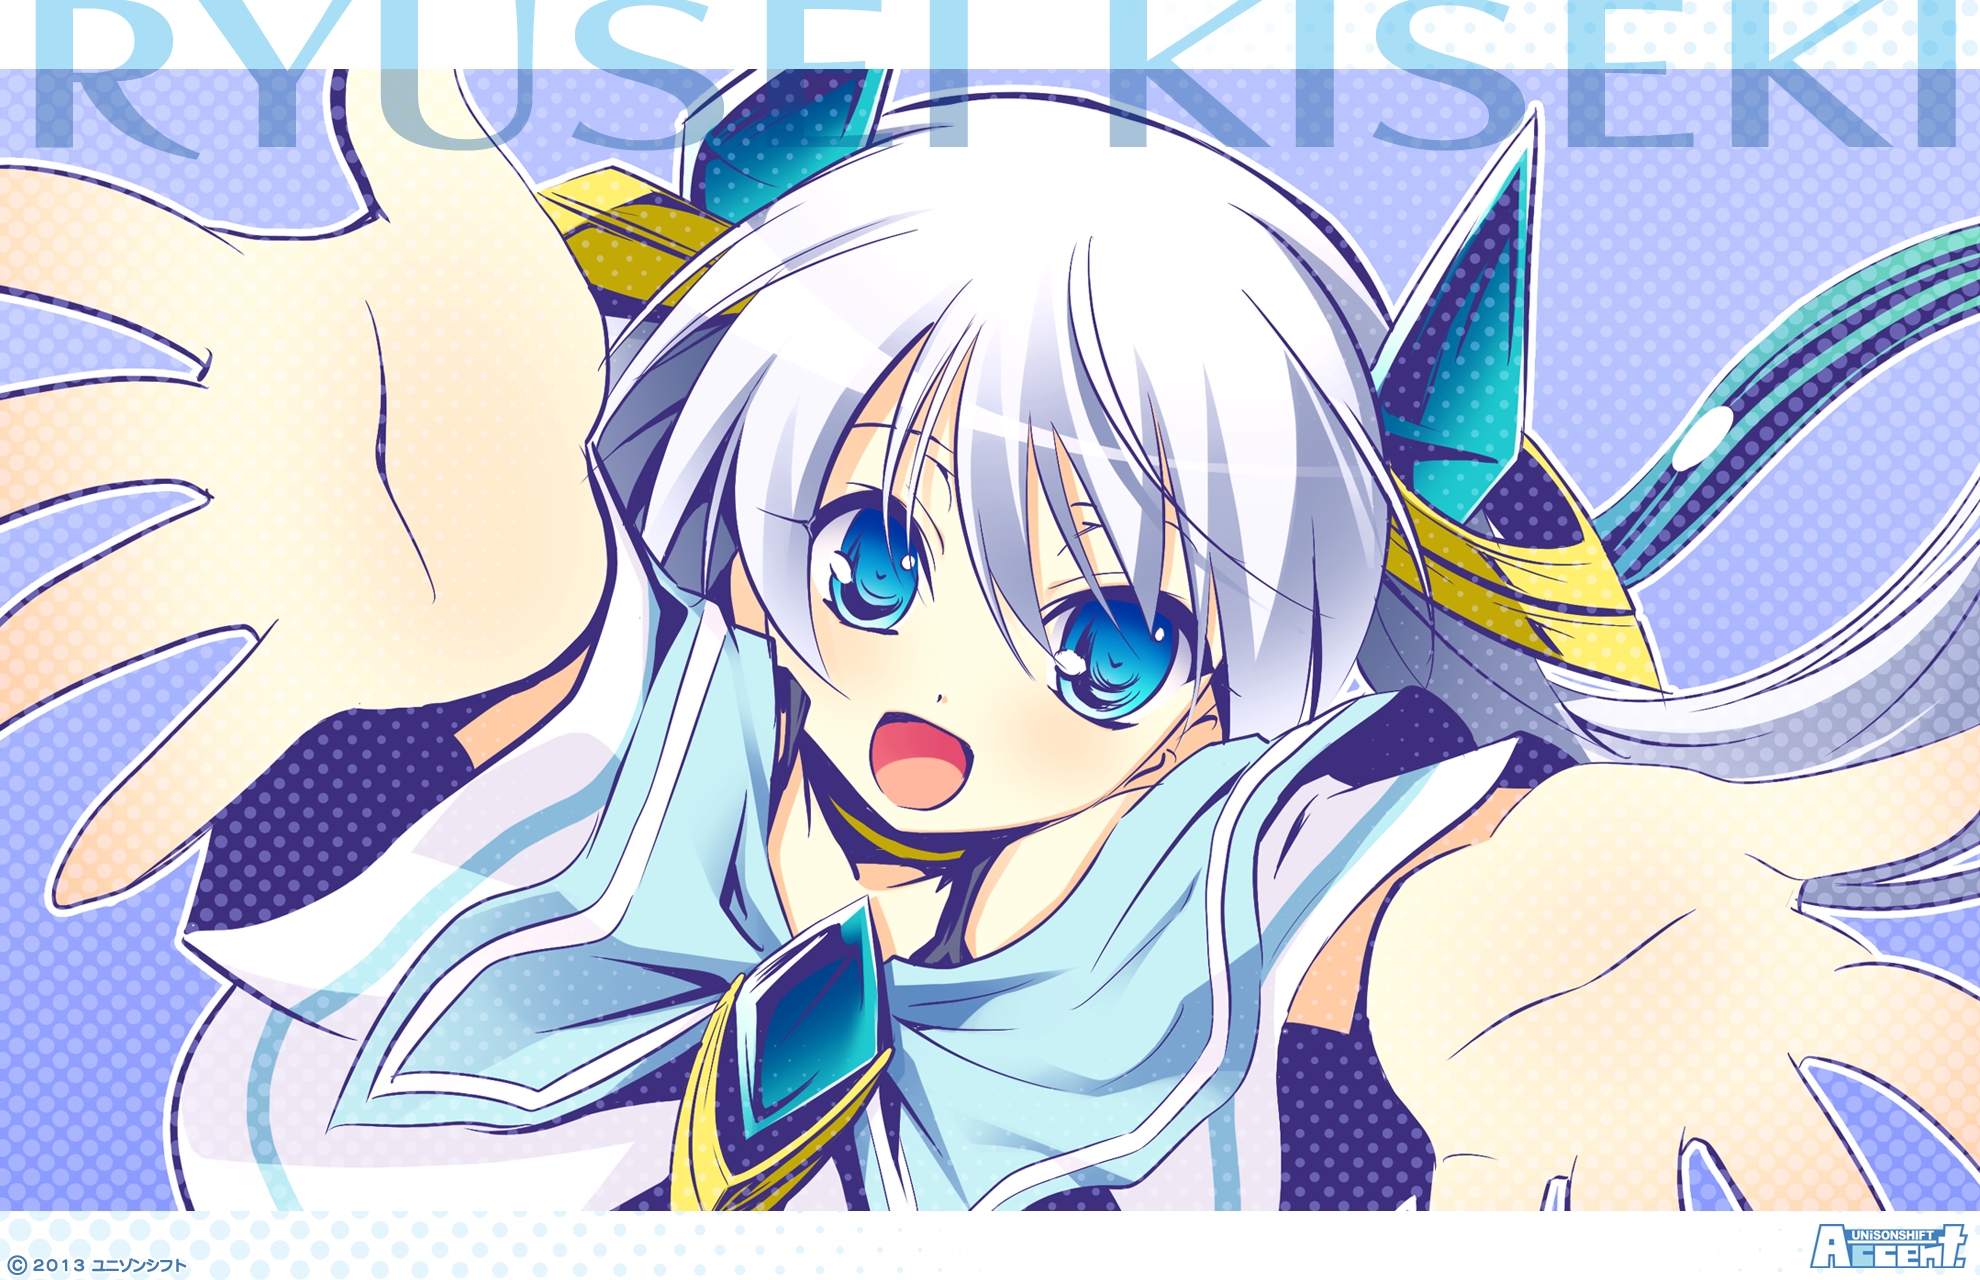 845450 baixar imagens anime, ryuusei☆kiseki shooting probe, twink (ryuusei☆kiseki) - papéis de parede e protetores de tela gratuitamente